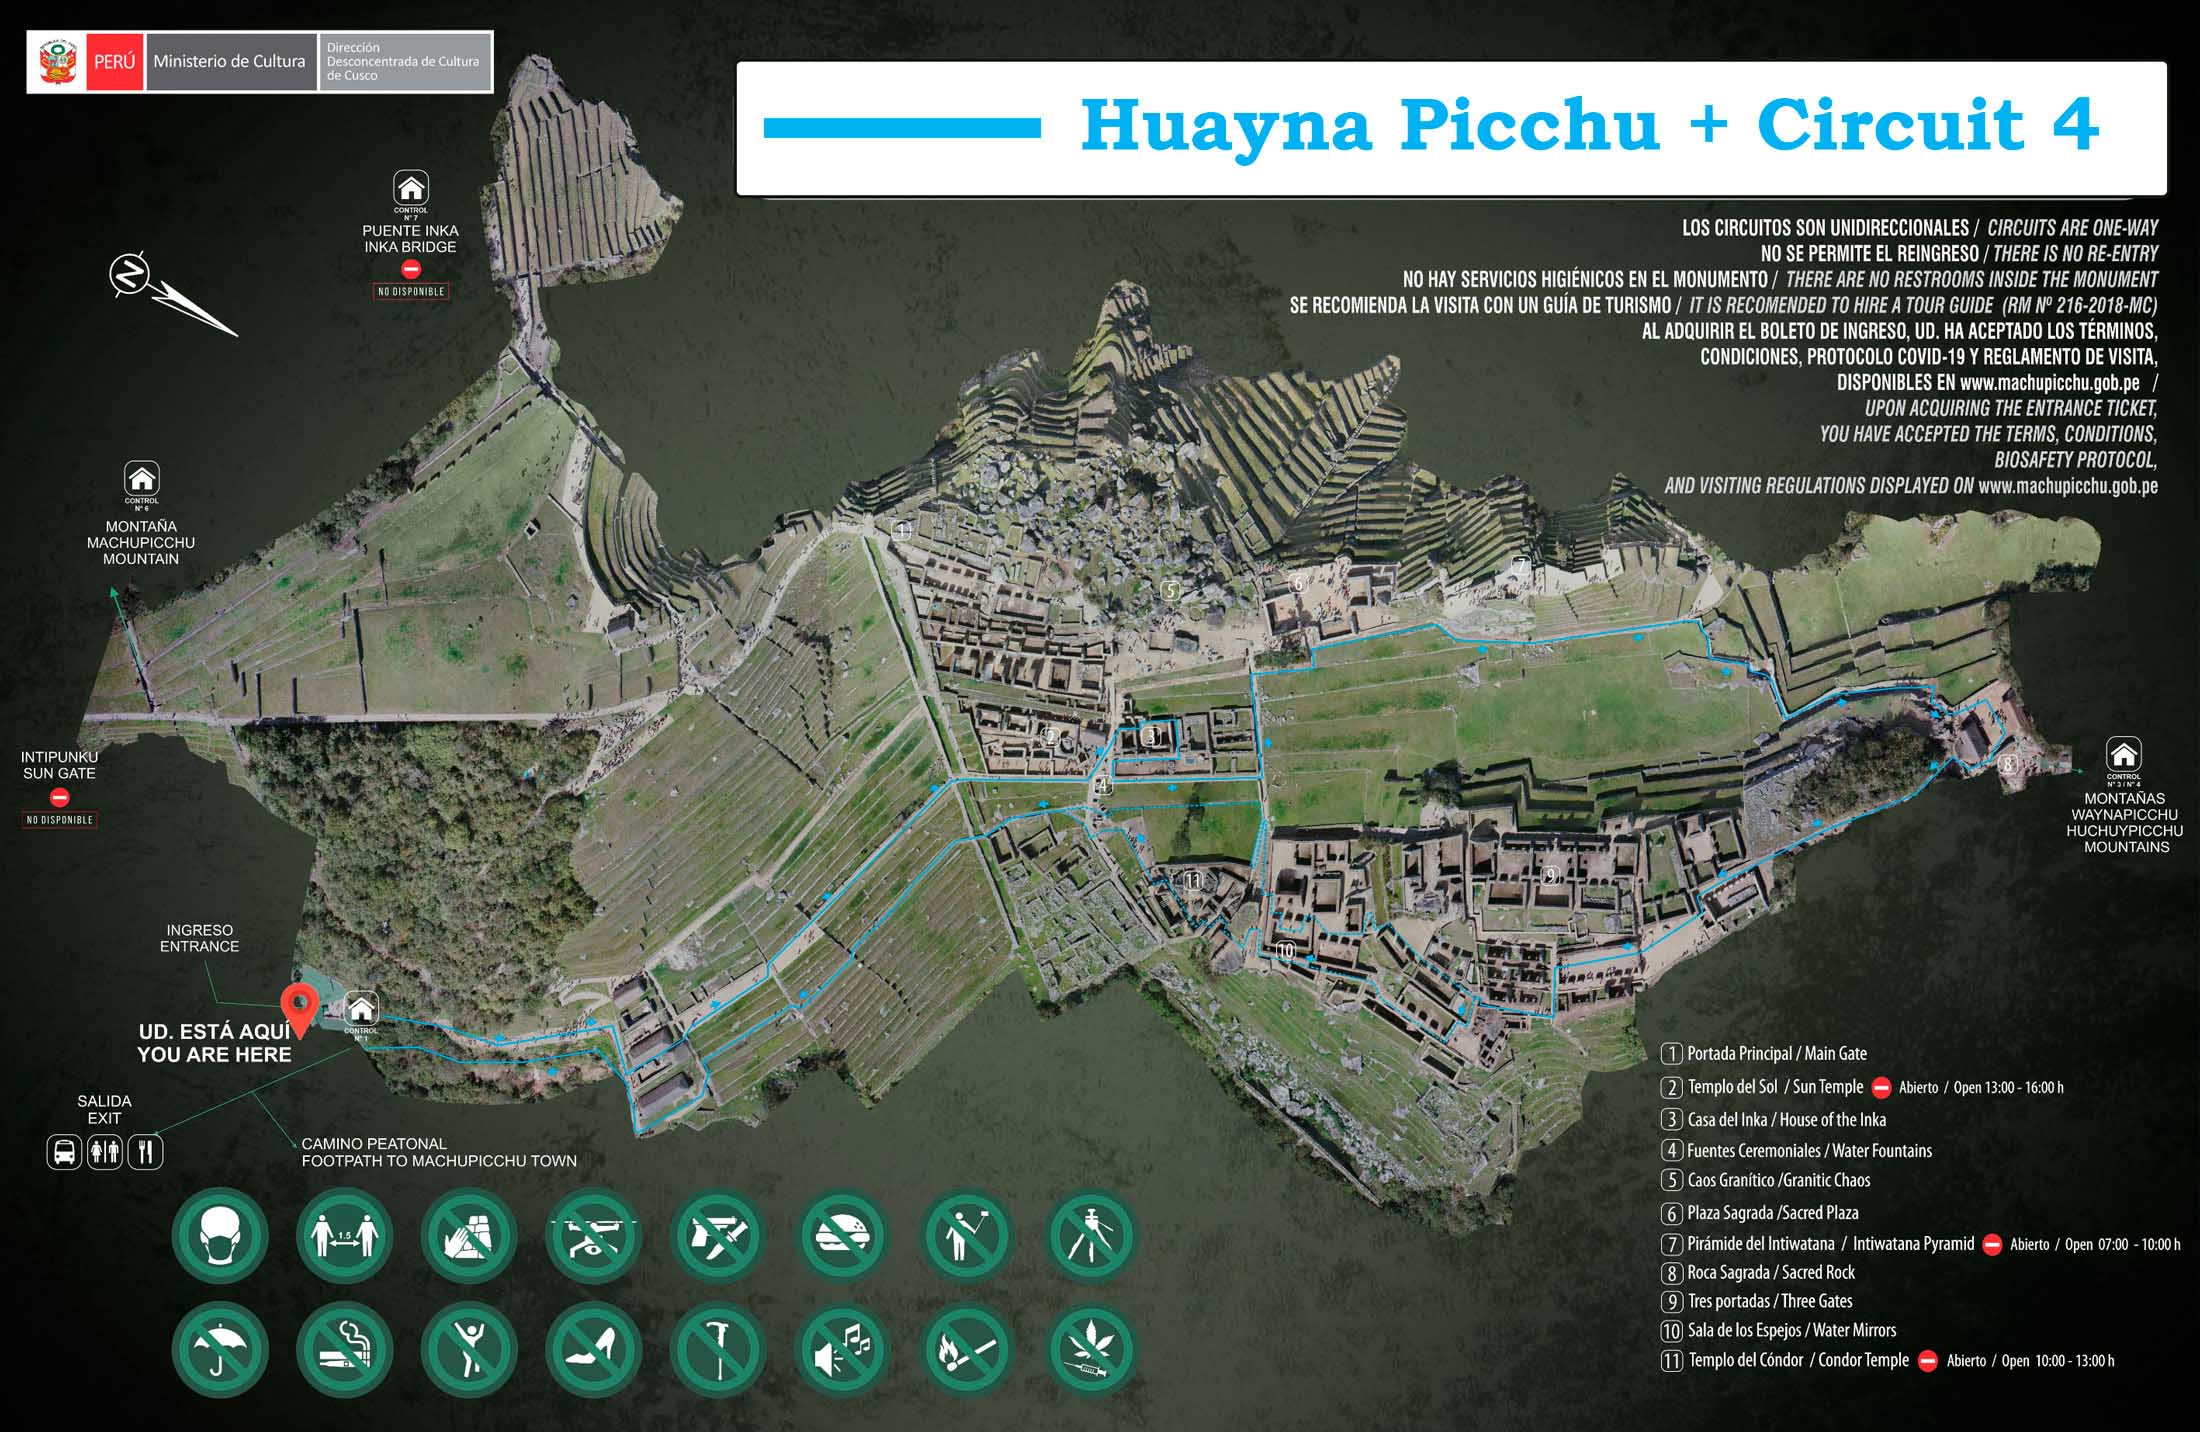 Huayna Picchu Ticket